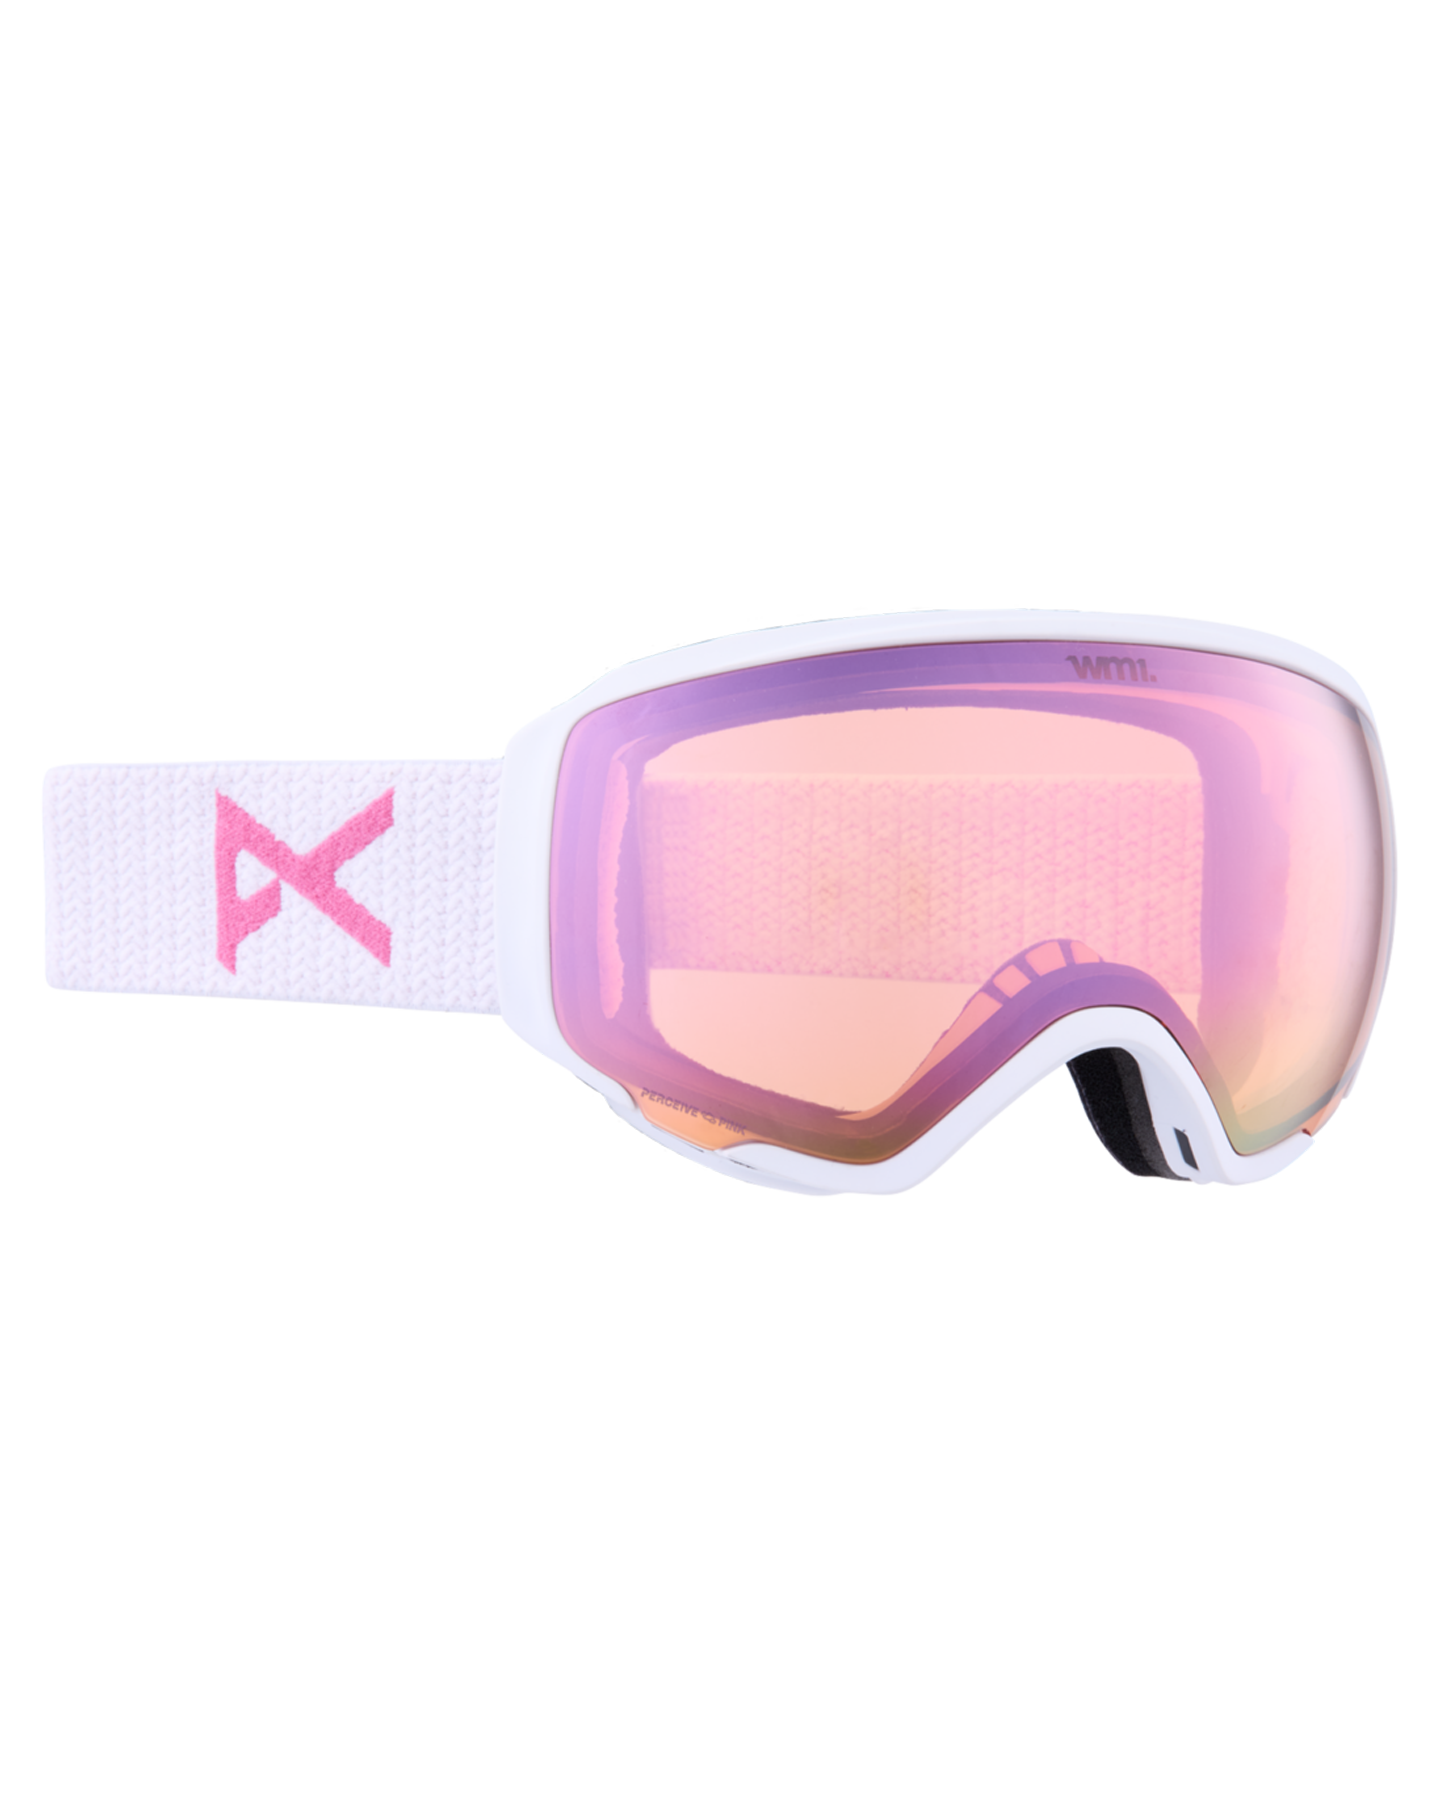 Anon WM1 Low Bridge Fit Snow Goggles + Bonus Lens + MFI - White / Perceive Cloudy Pink Women's Snow Goggles - SnowSkiersWarehouse